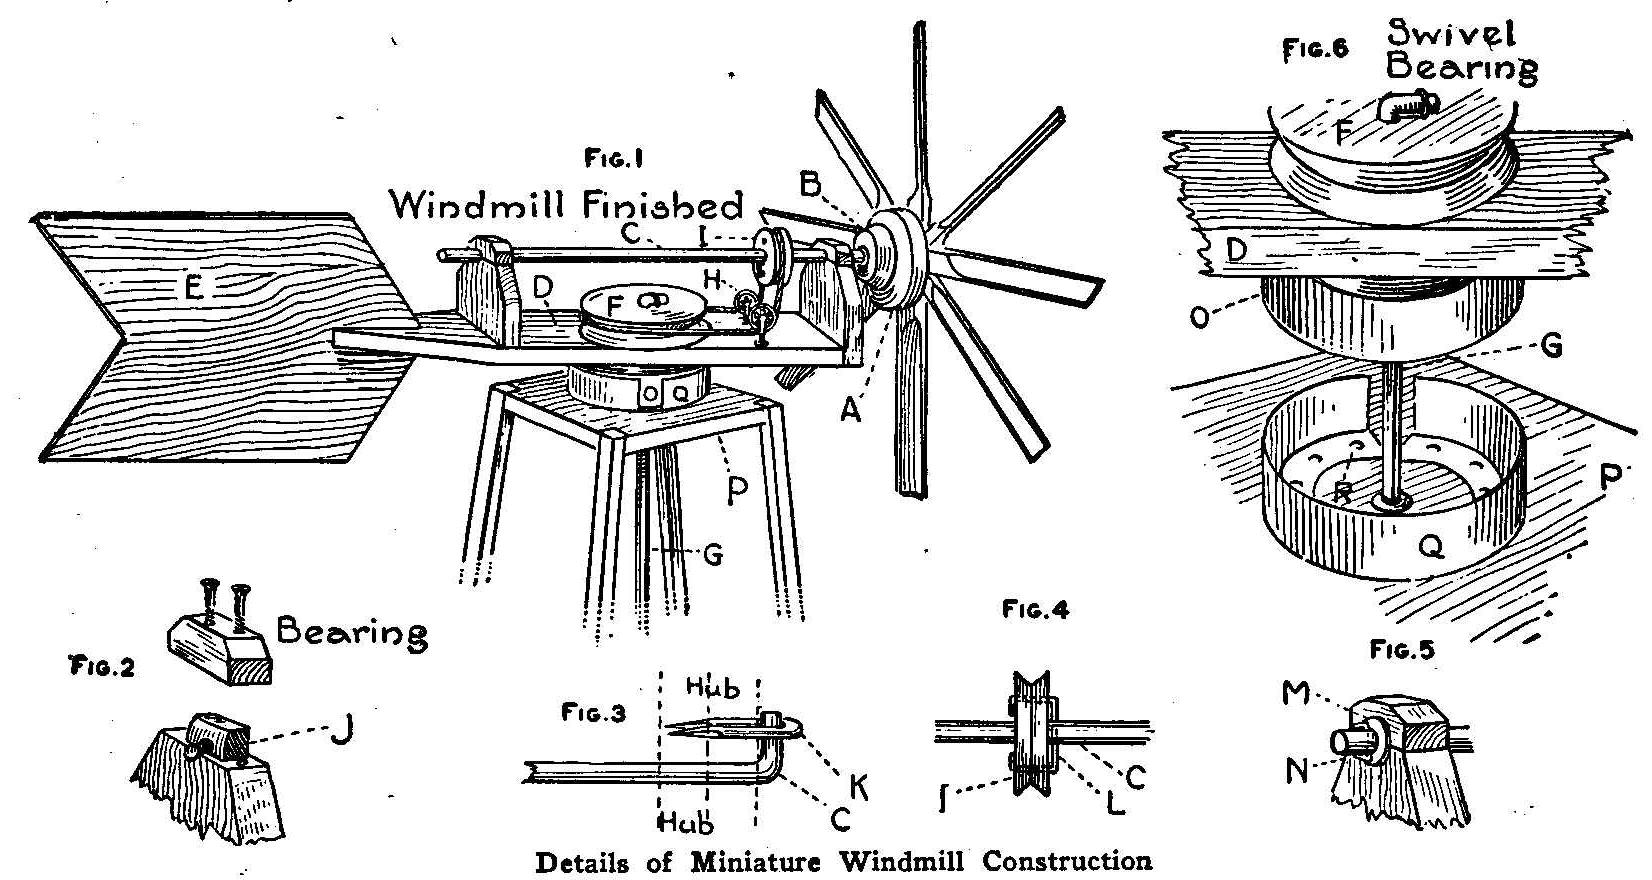 Details of Miniature Windmill Construction 